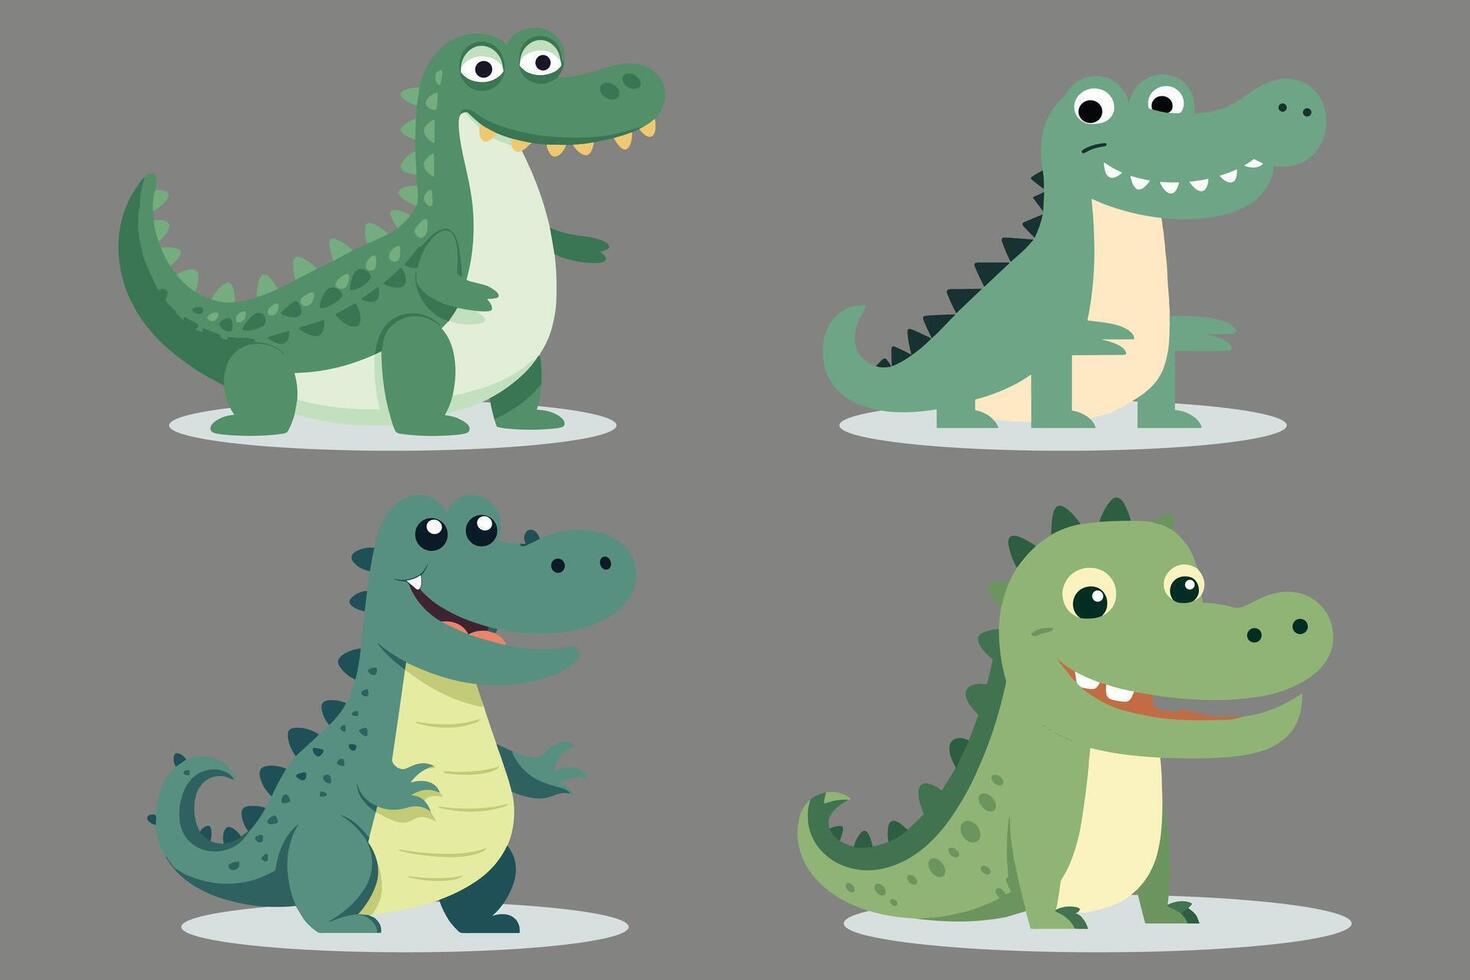 tecknad serie krokodil vektor illustration.